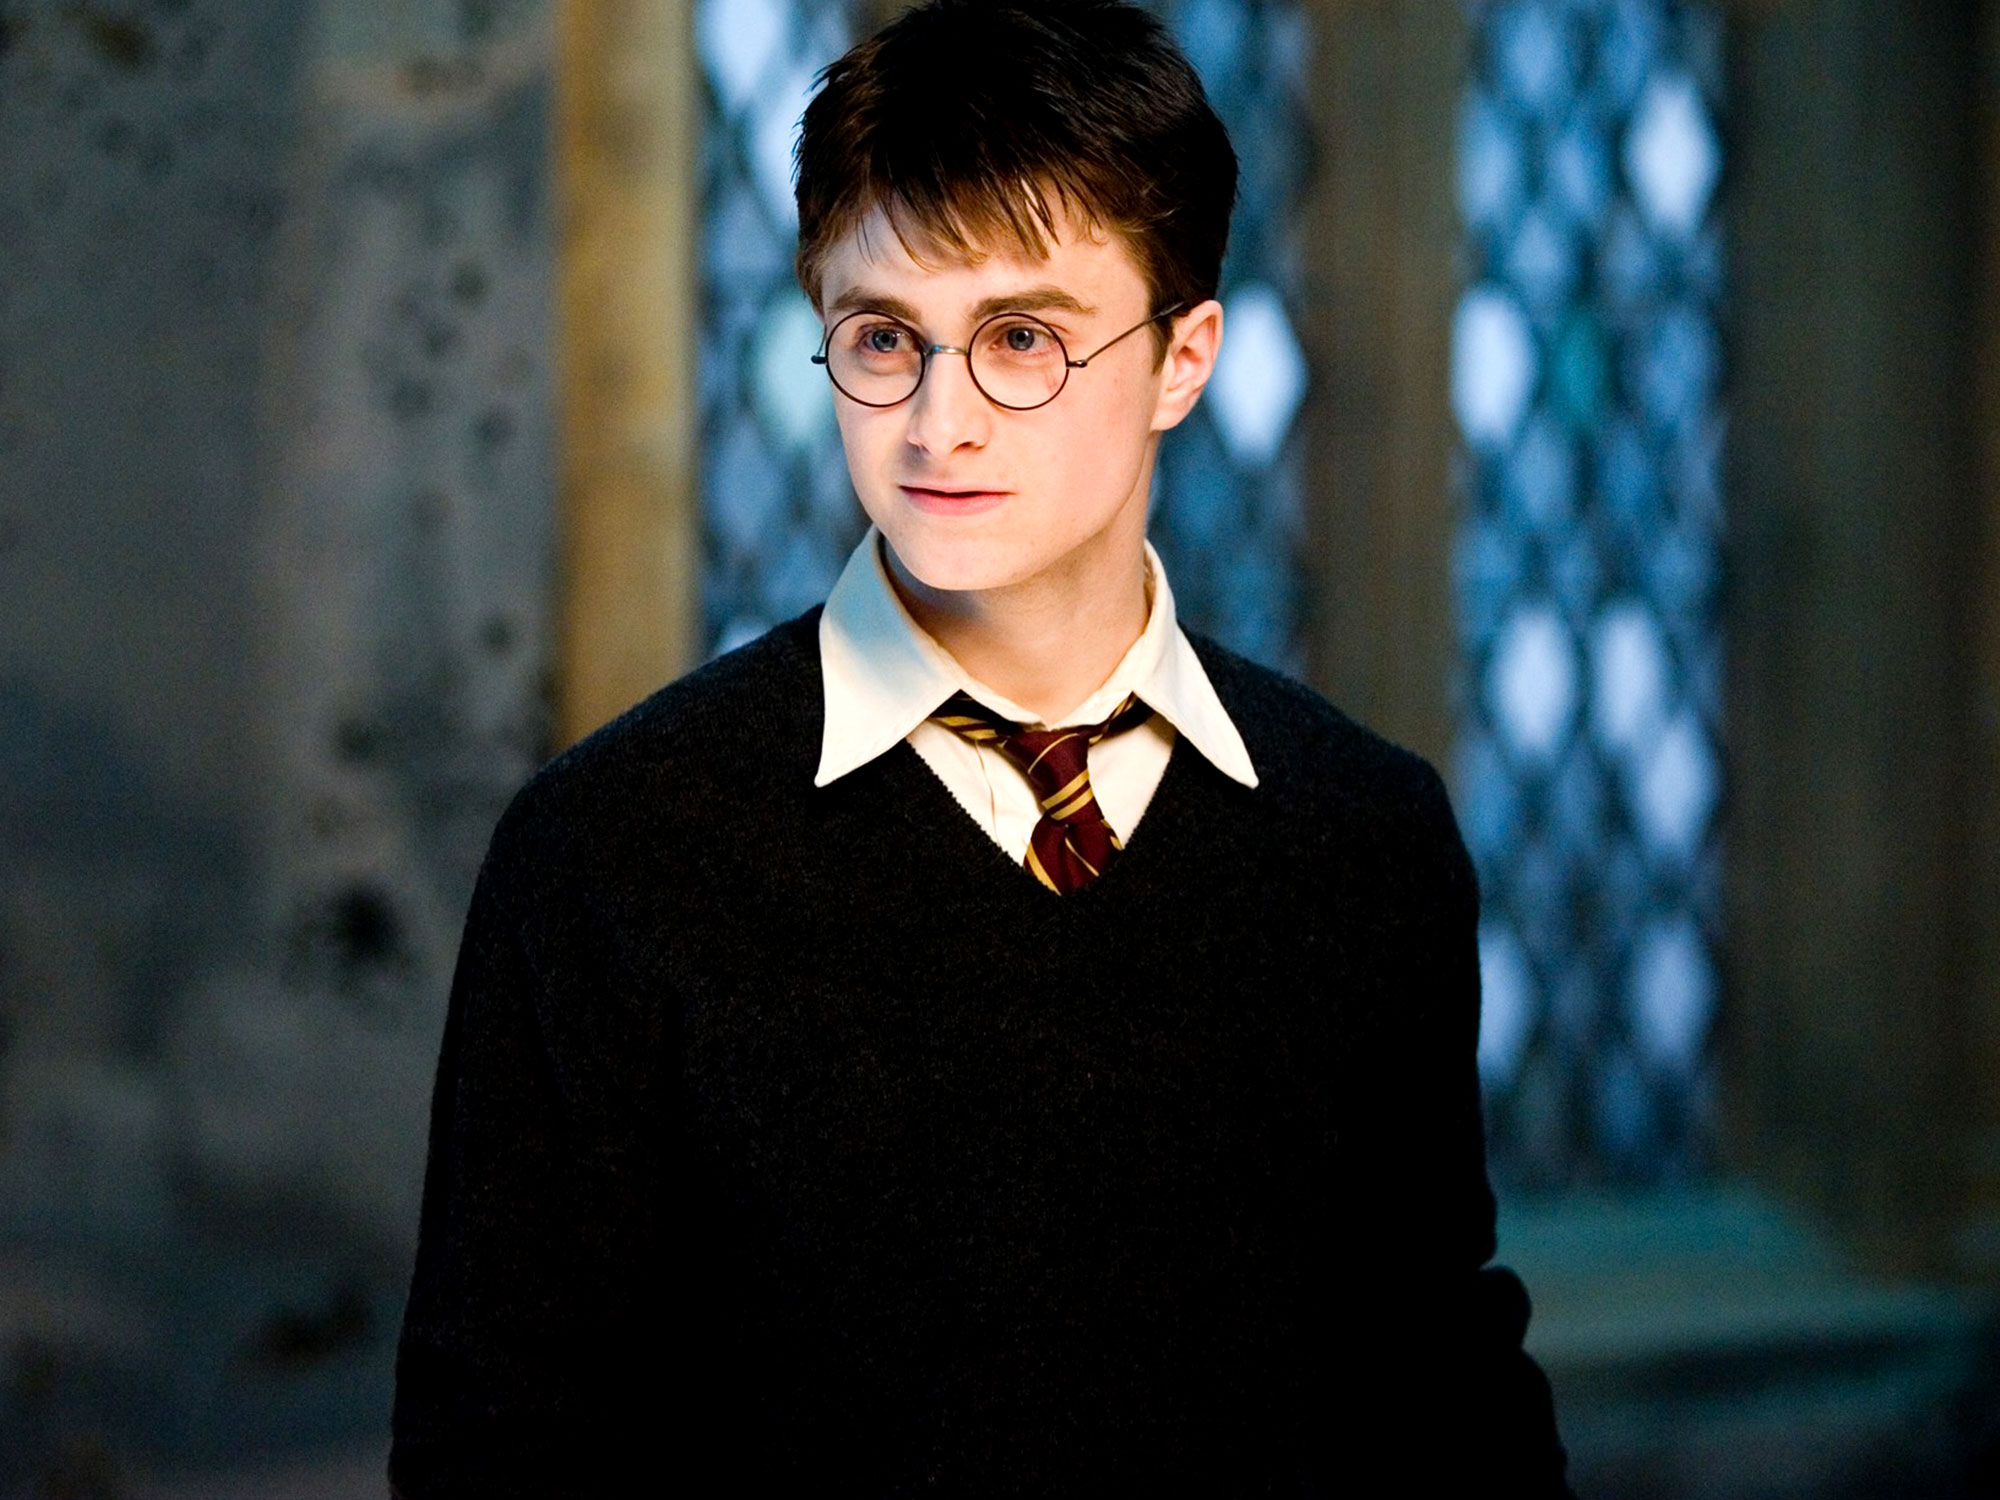 HBO Max confirma "interesse" em série spin-off de "Harry Potter"